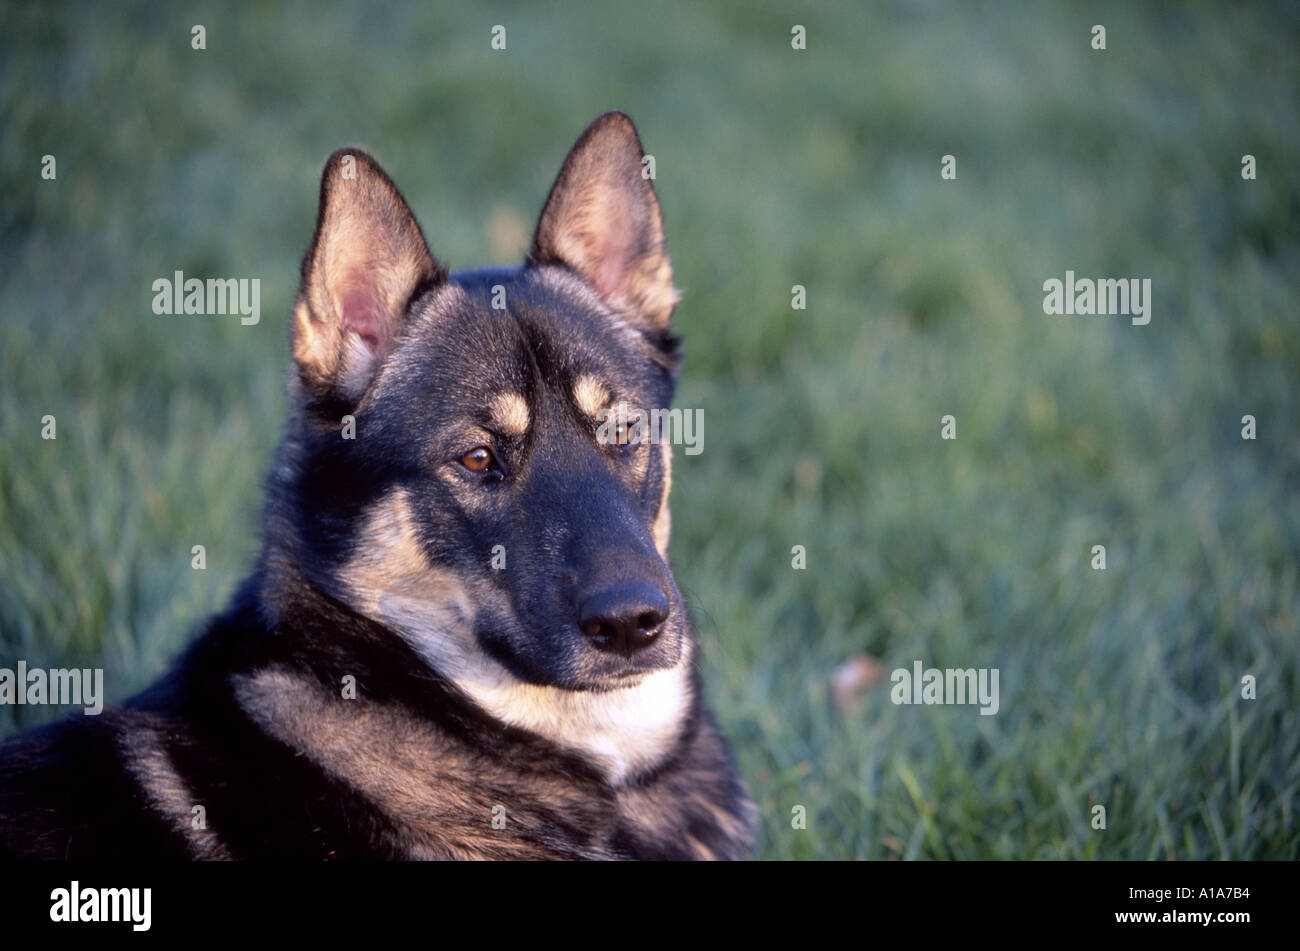 German Shepherd And Norwegian Elkhound Mix Against Grass Background Stock Photo Alamy